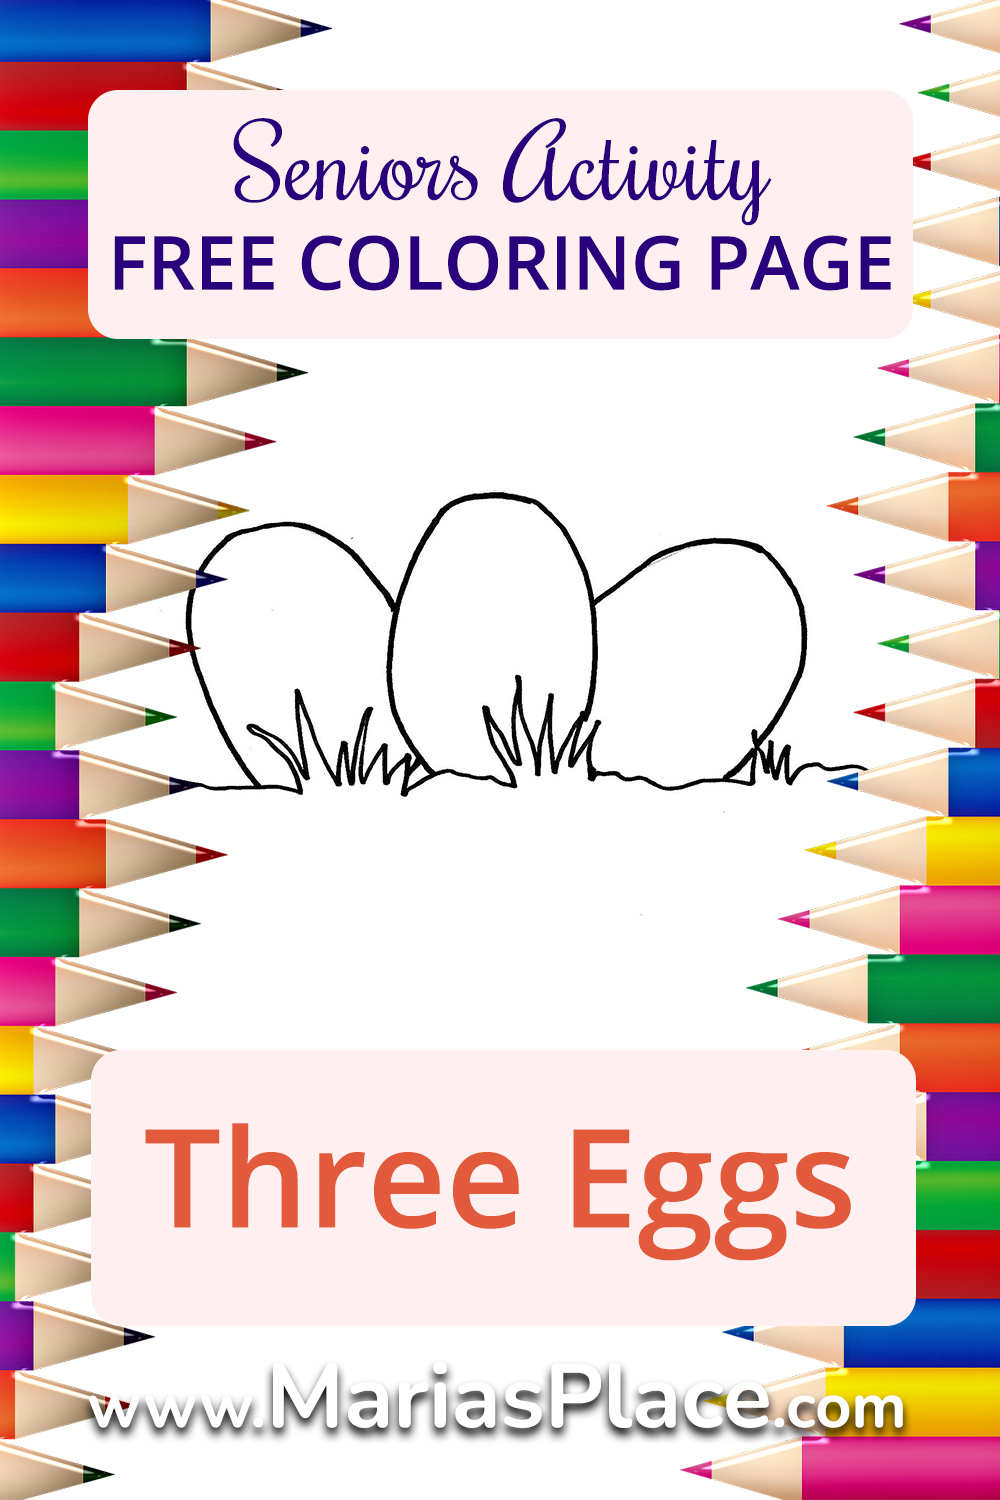 Coloring – Three Eggs